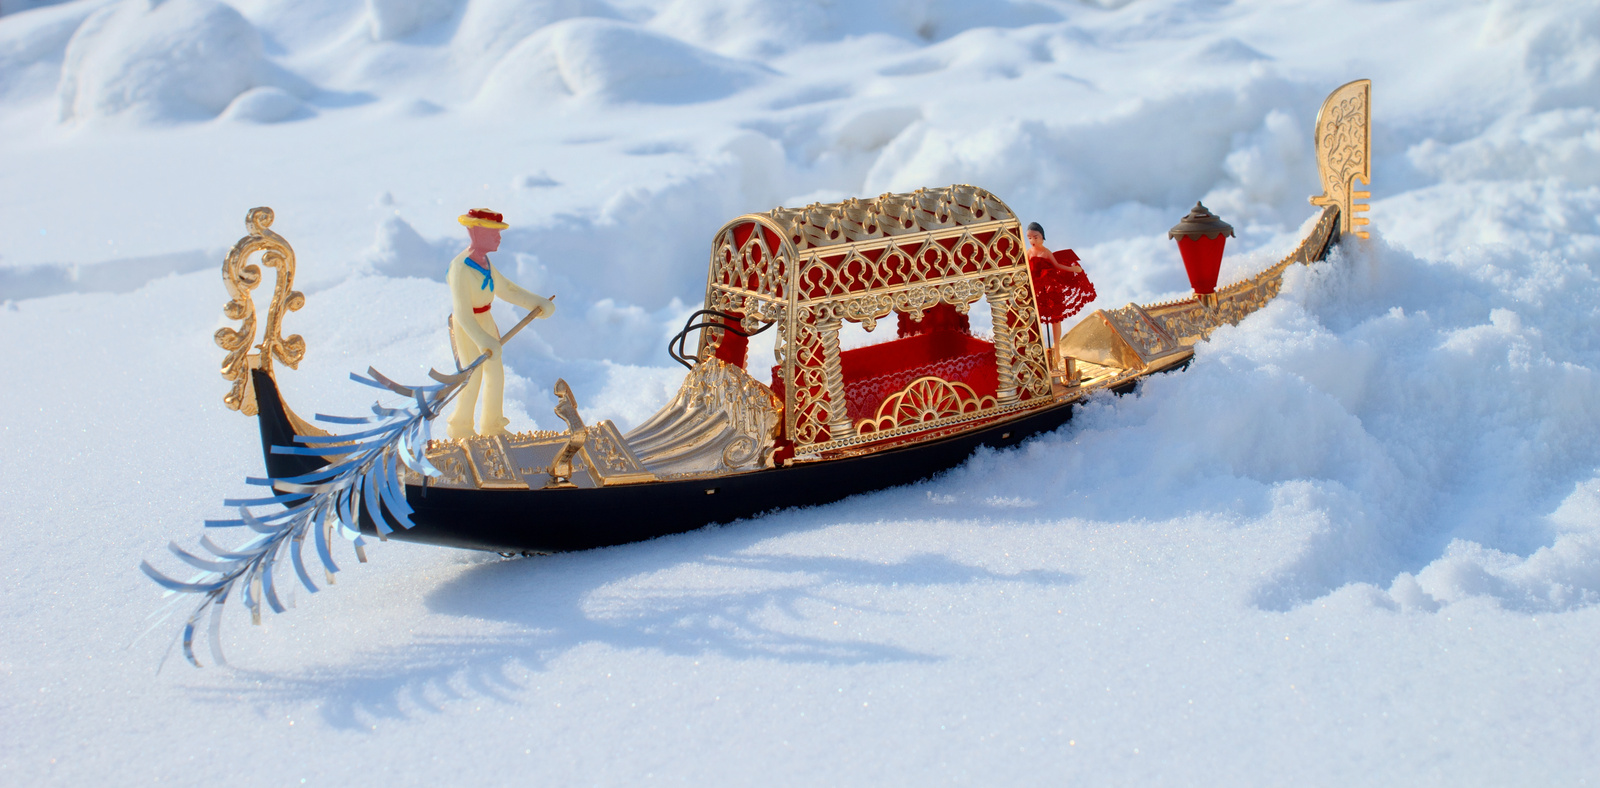 Gondola in the Snow